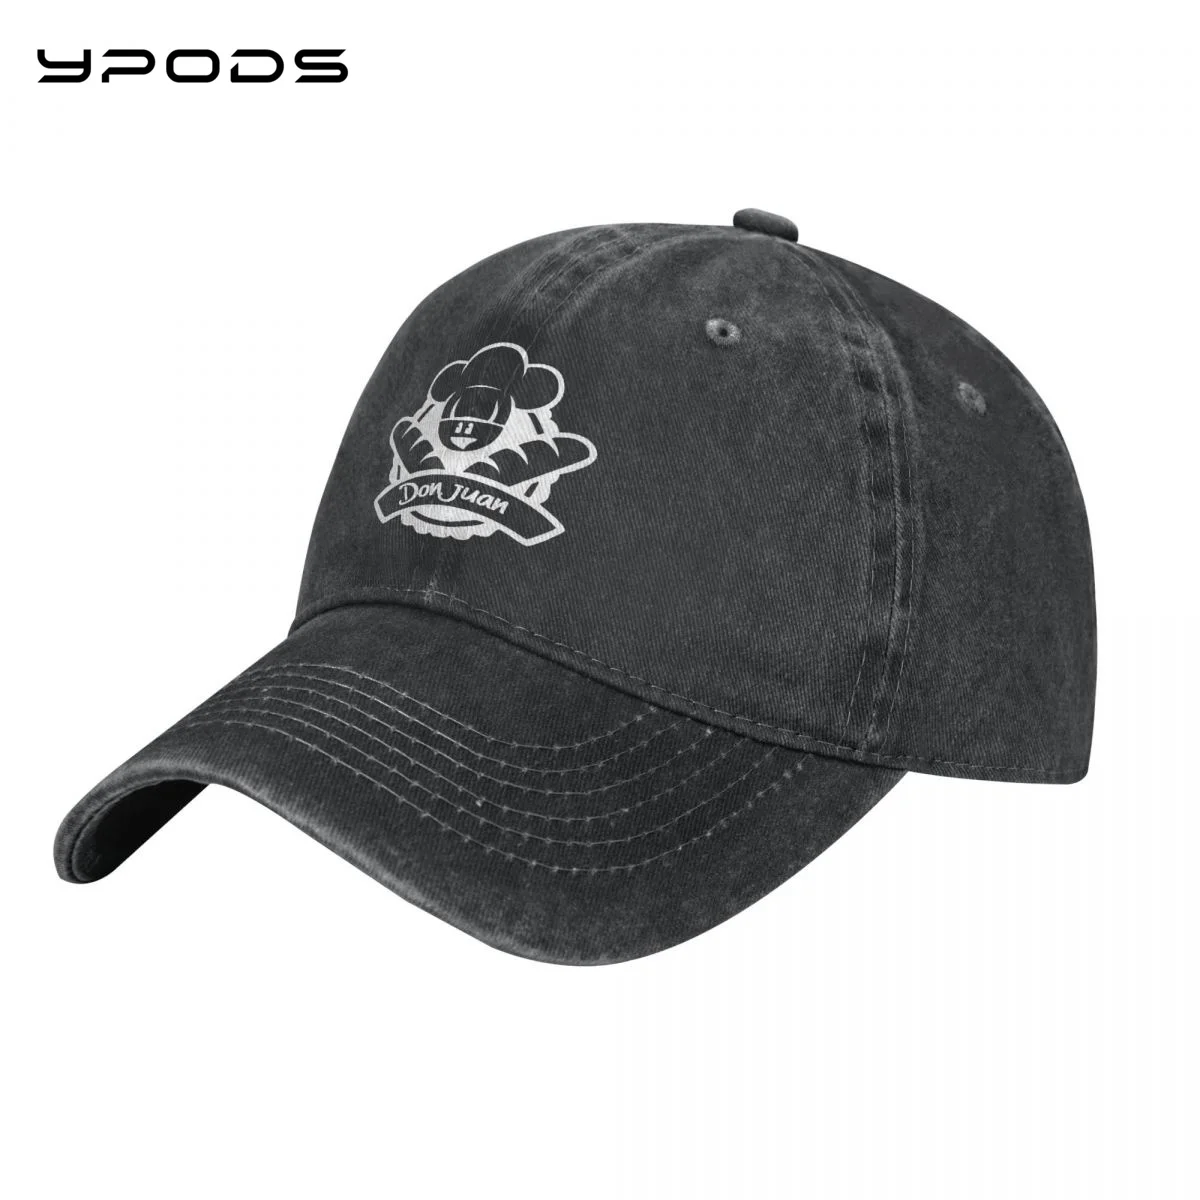 

Don Juan Baseball Caps for Men Women Vintage Washed Cotton Dad Hats Print Snapback Cap Hat